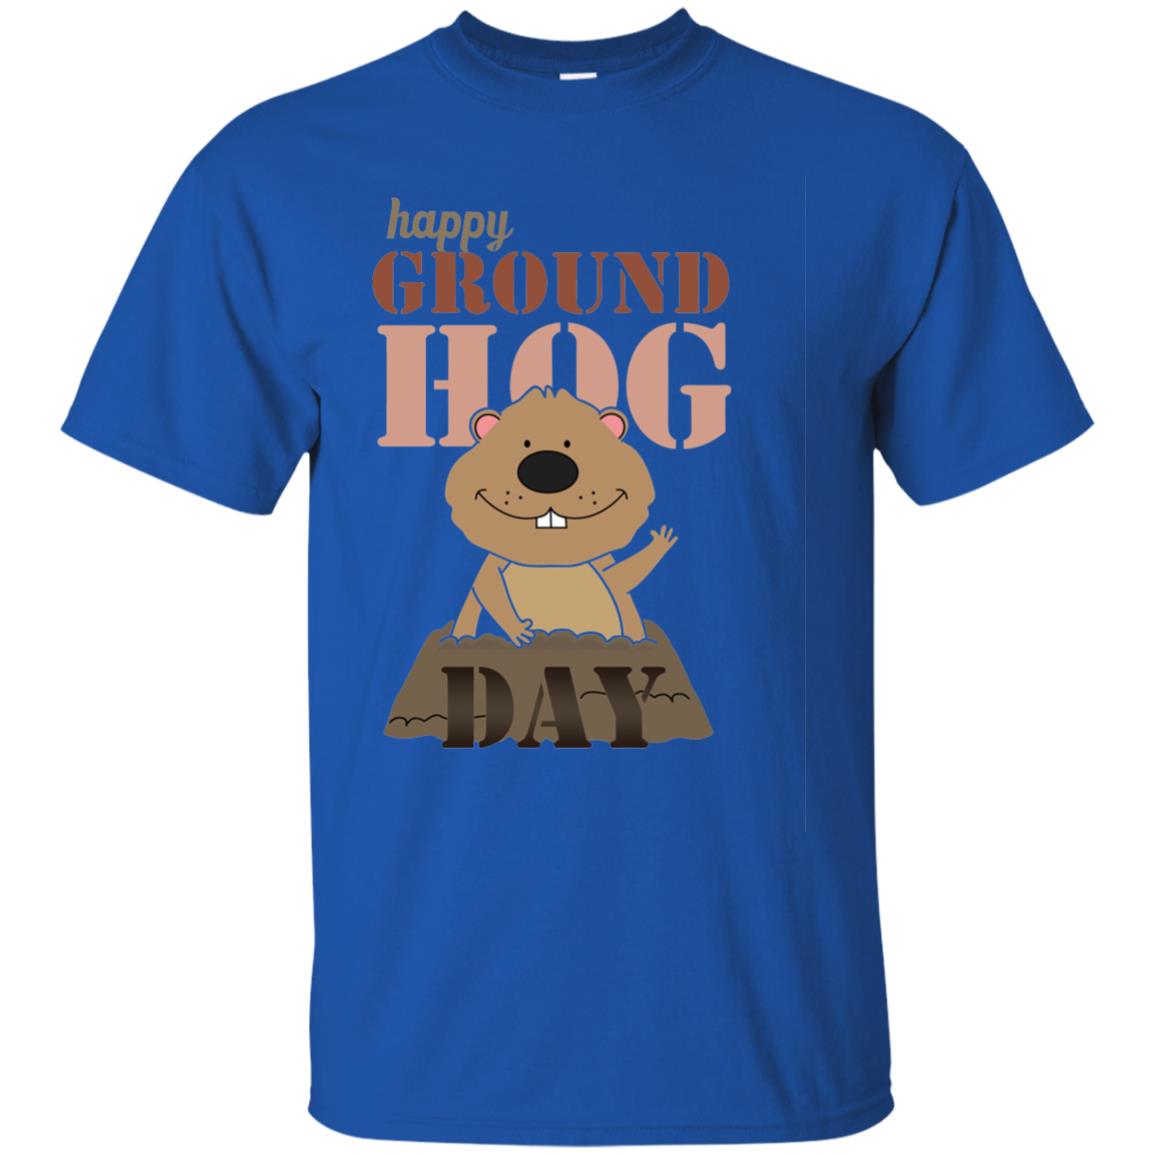 Groundhog Day Shirt - 10% Off - FavorMerch